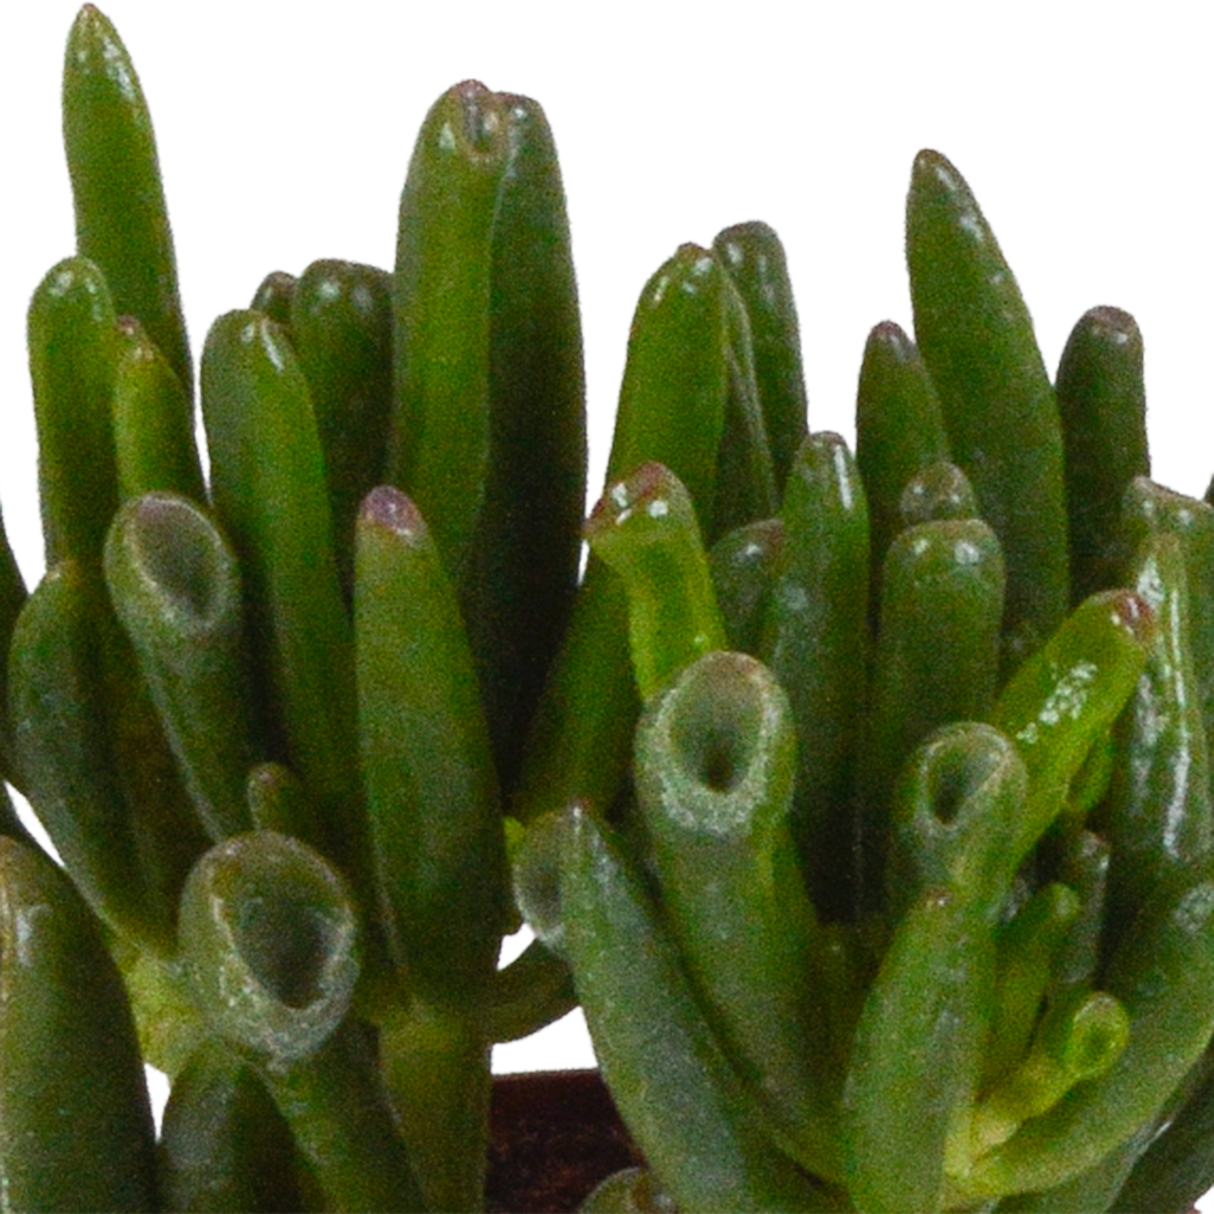 Coffret crassula - Lot de 3 plantes, h18cm - box cadeau mini succulente